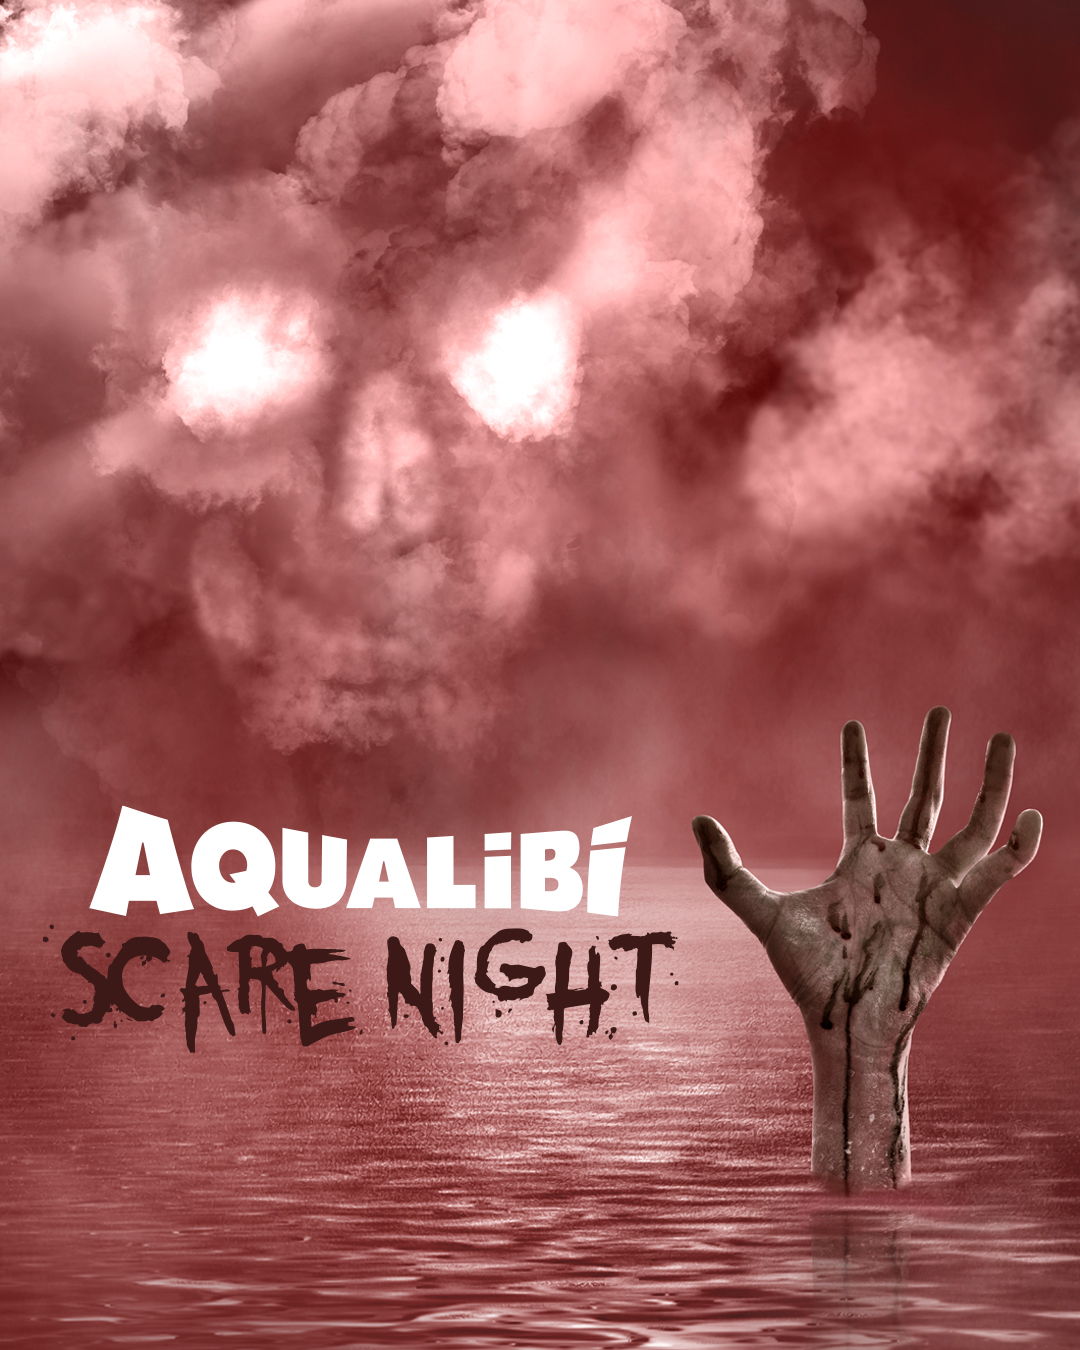 Aqualibi Scare Nights: van 28 t.e.m 31 oktober.
Halloweenanimaties vanaf 18u.